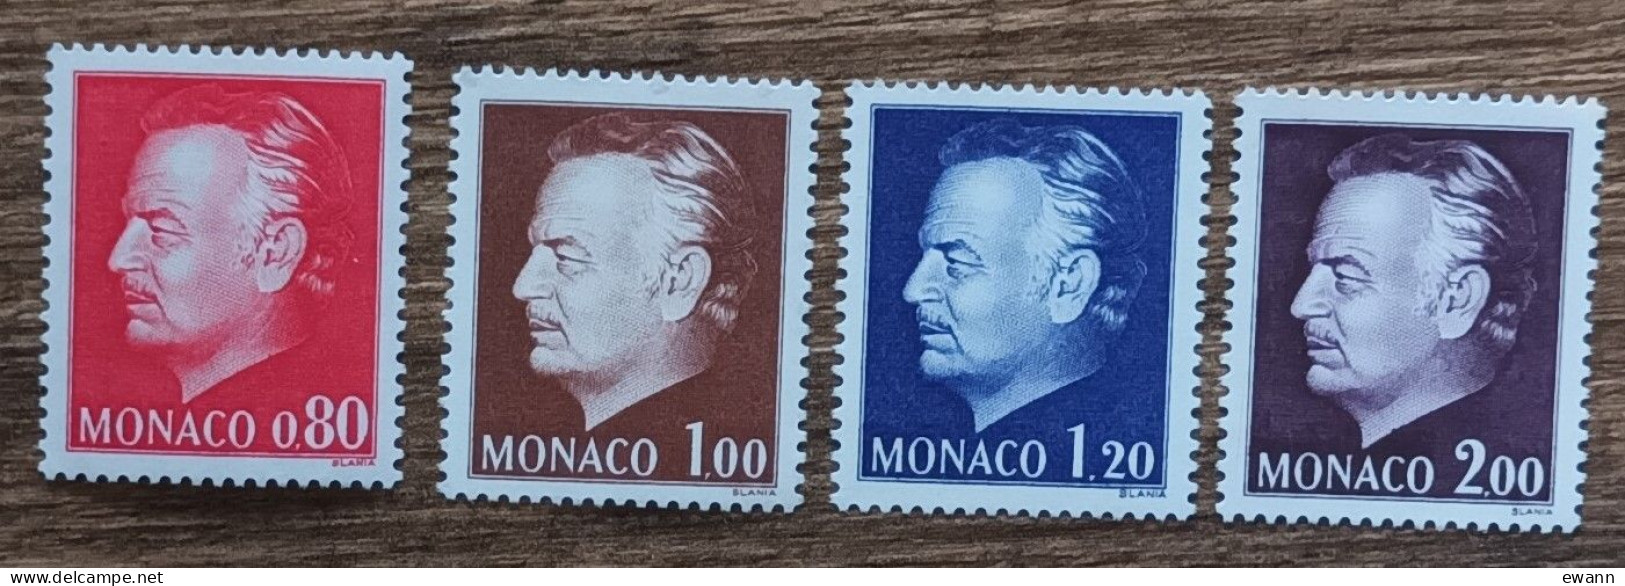 Monaco - YT N°993 à 996 - Nouvelle Effigie Du Prince Rainier III - 1974 - Neuf - Ongebruikt